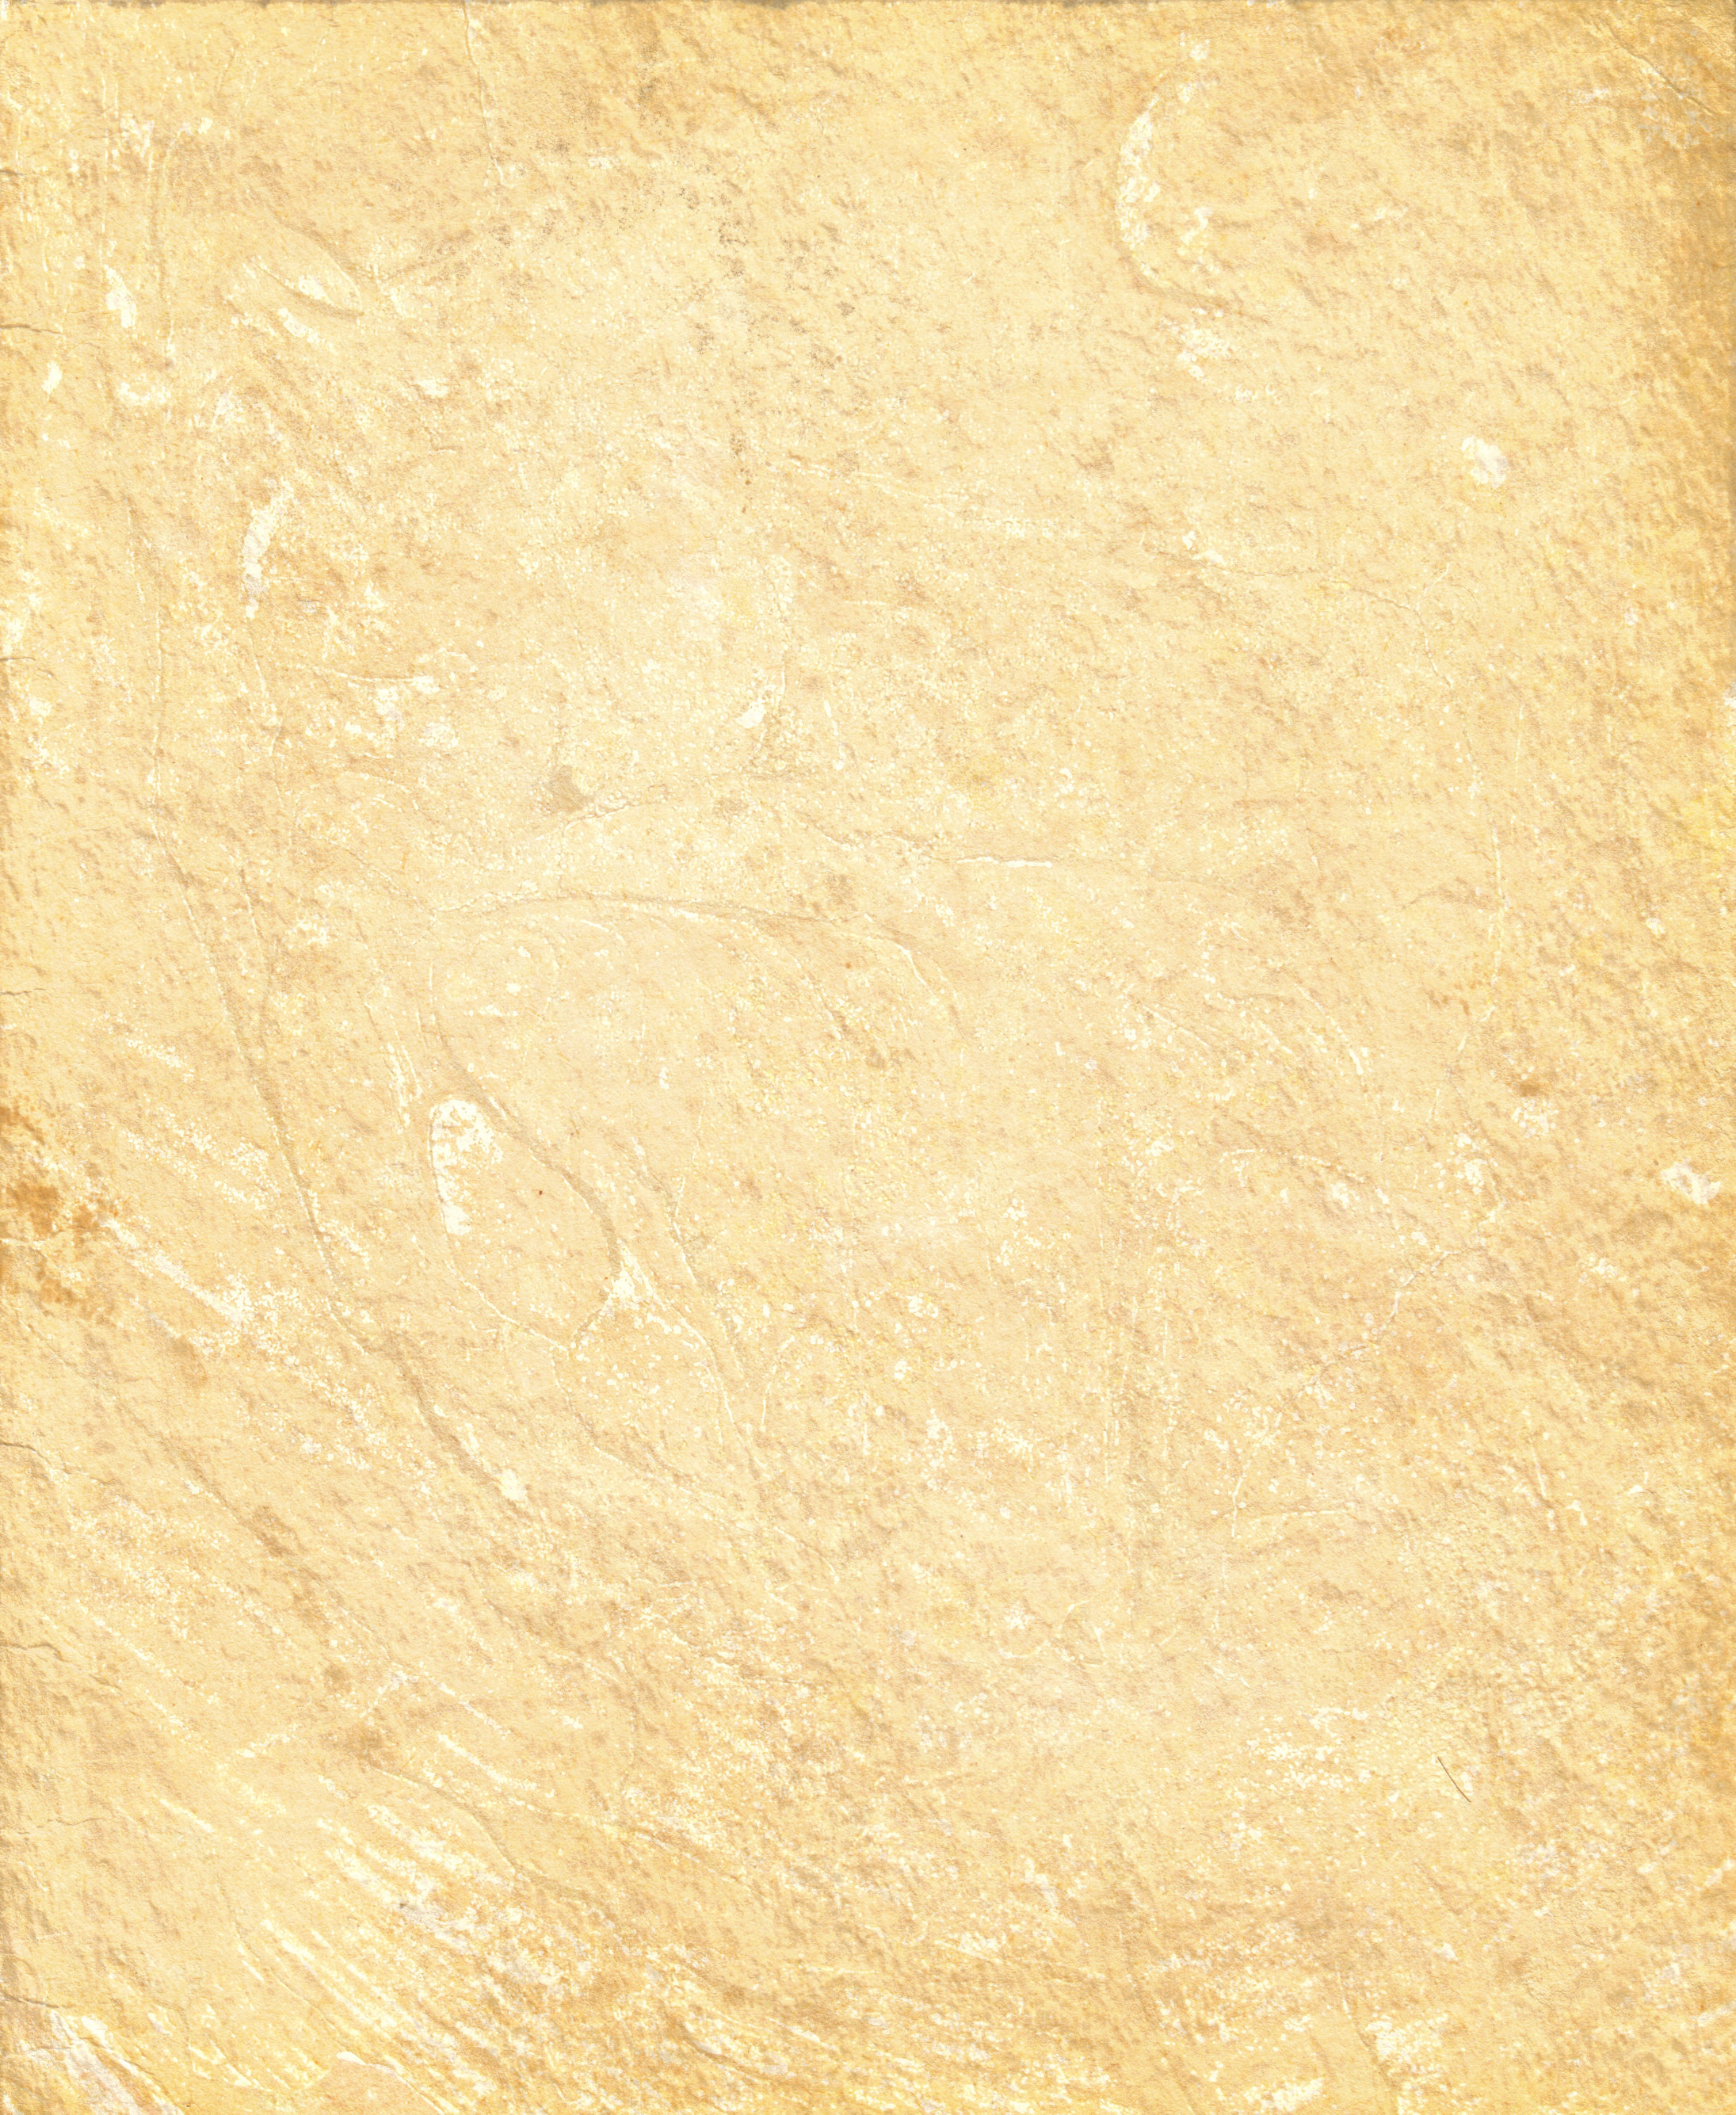 paper texture by akinna-stock on DeviantArt